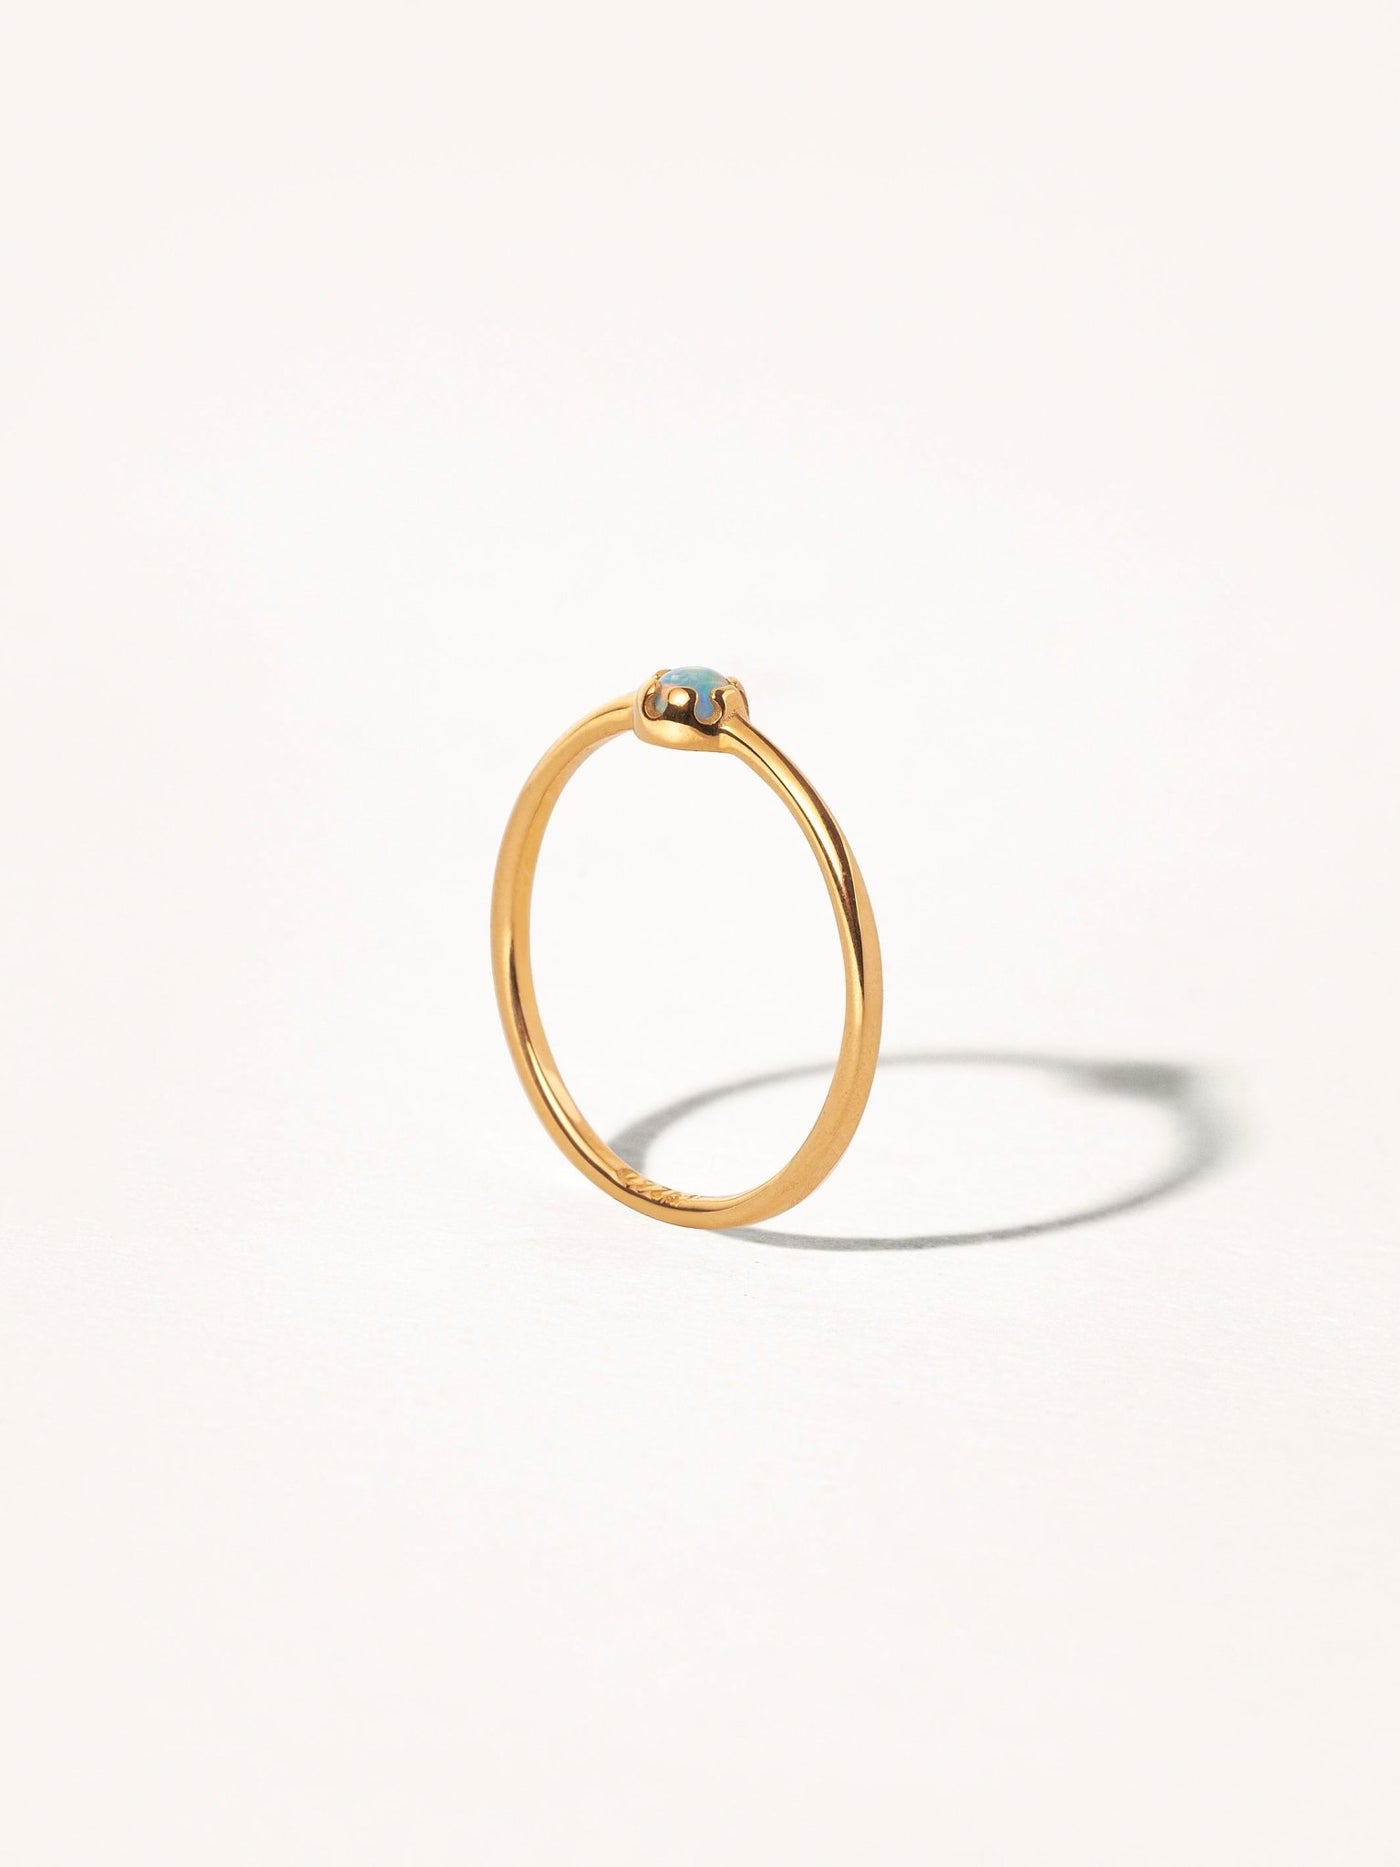 Kerr Small Stacking Ring - 24K Gold Vermeil4BackUpItemsBirthstone JewelryLunai Jewelry